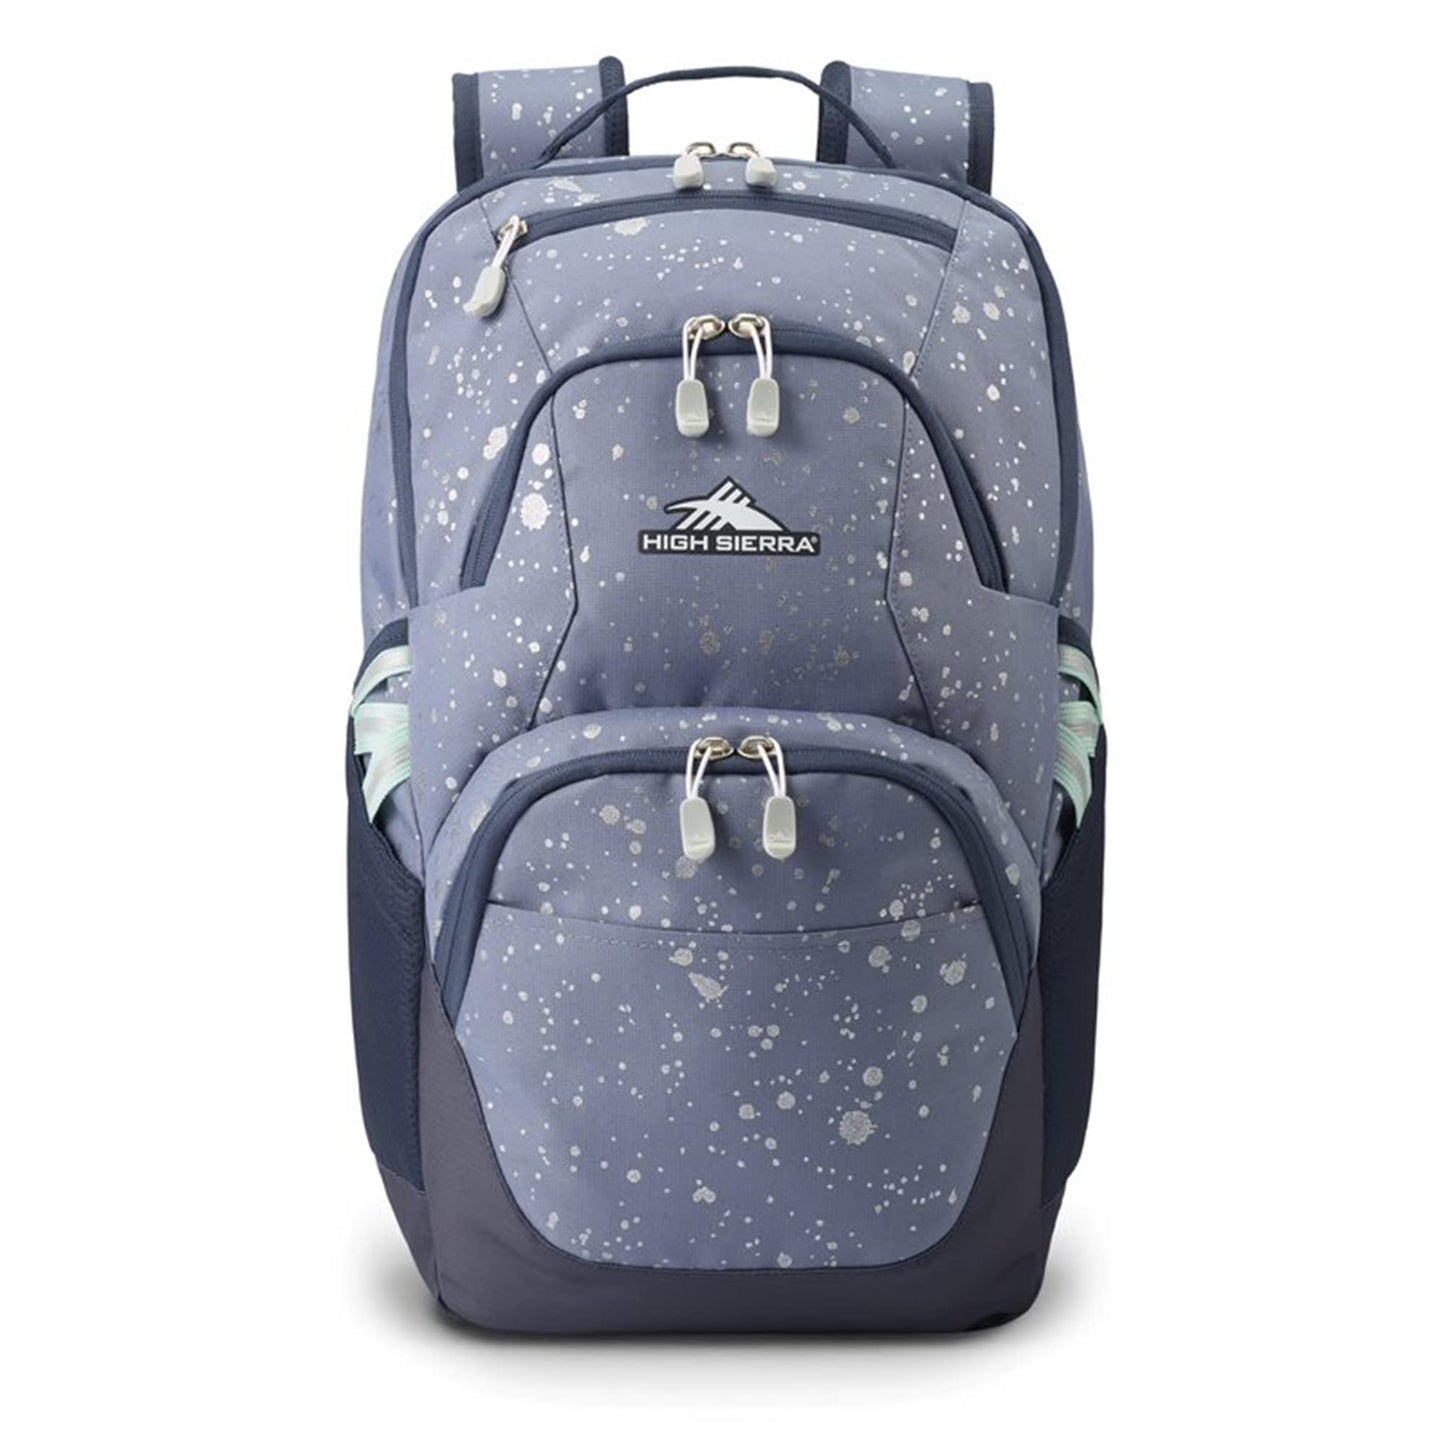 High Sierra Swoop SG Travel Laptop Bag